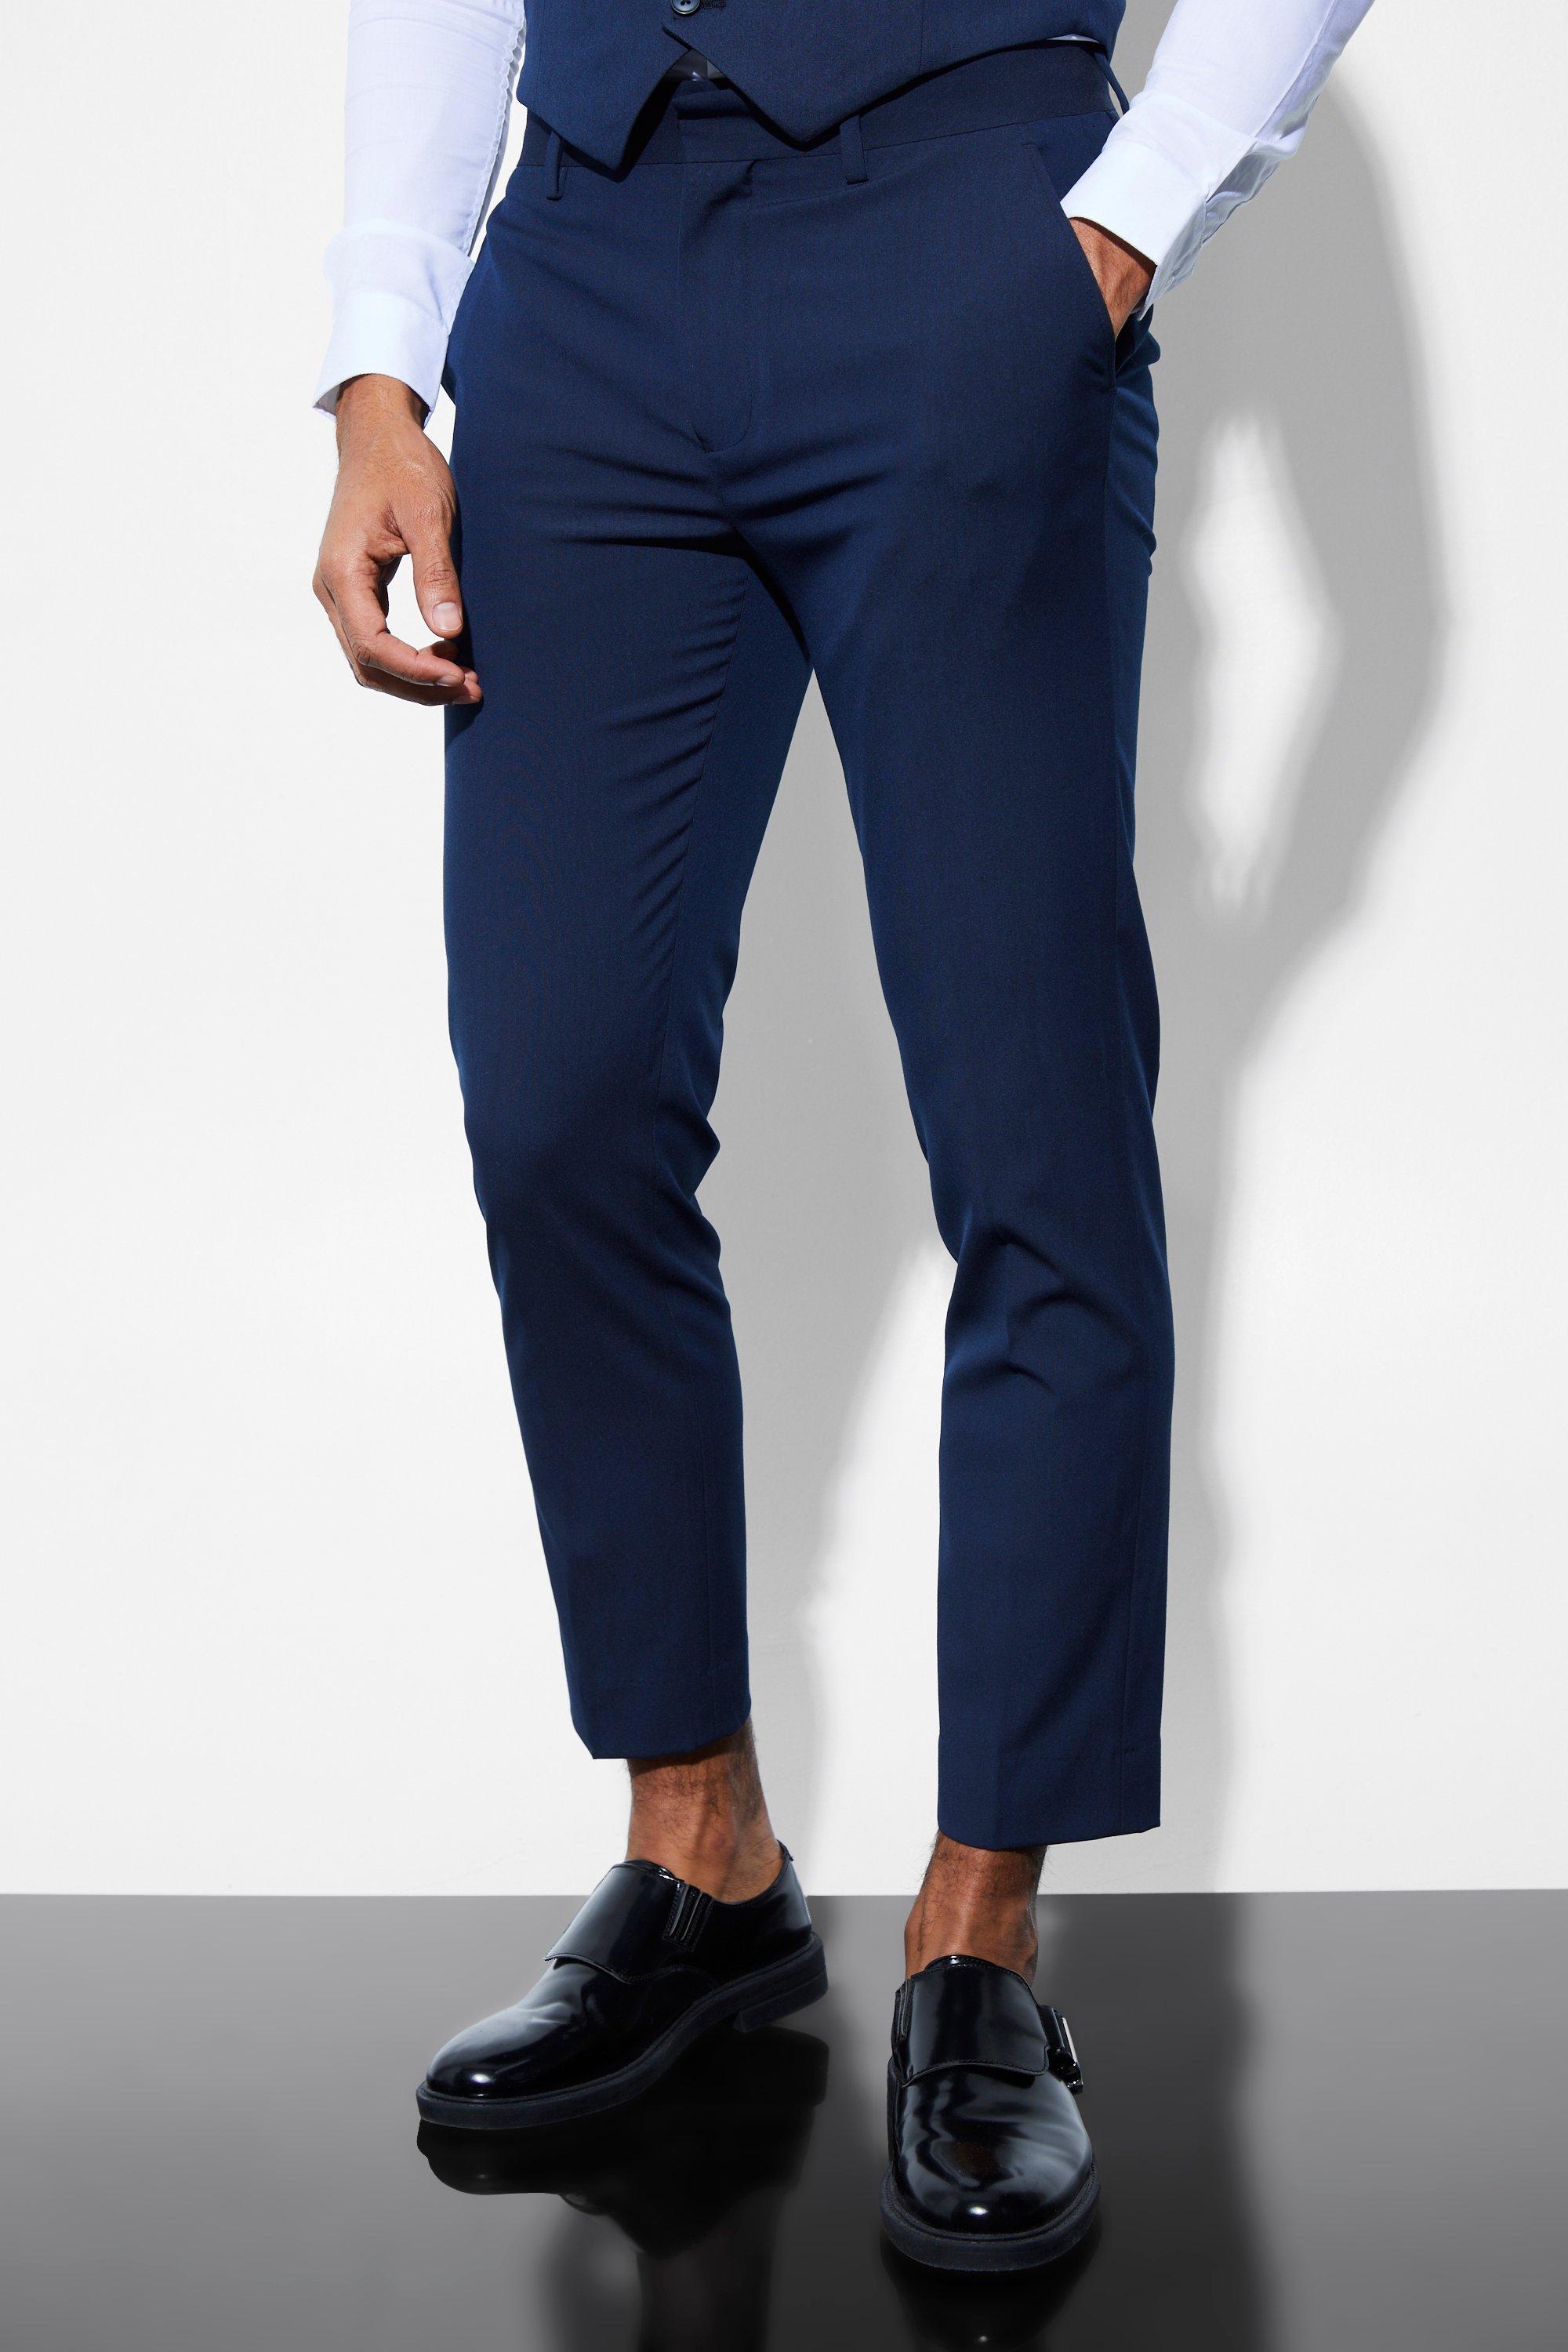 pantalon de costume skinny court homme - bleu - 28r, bleu